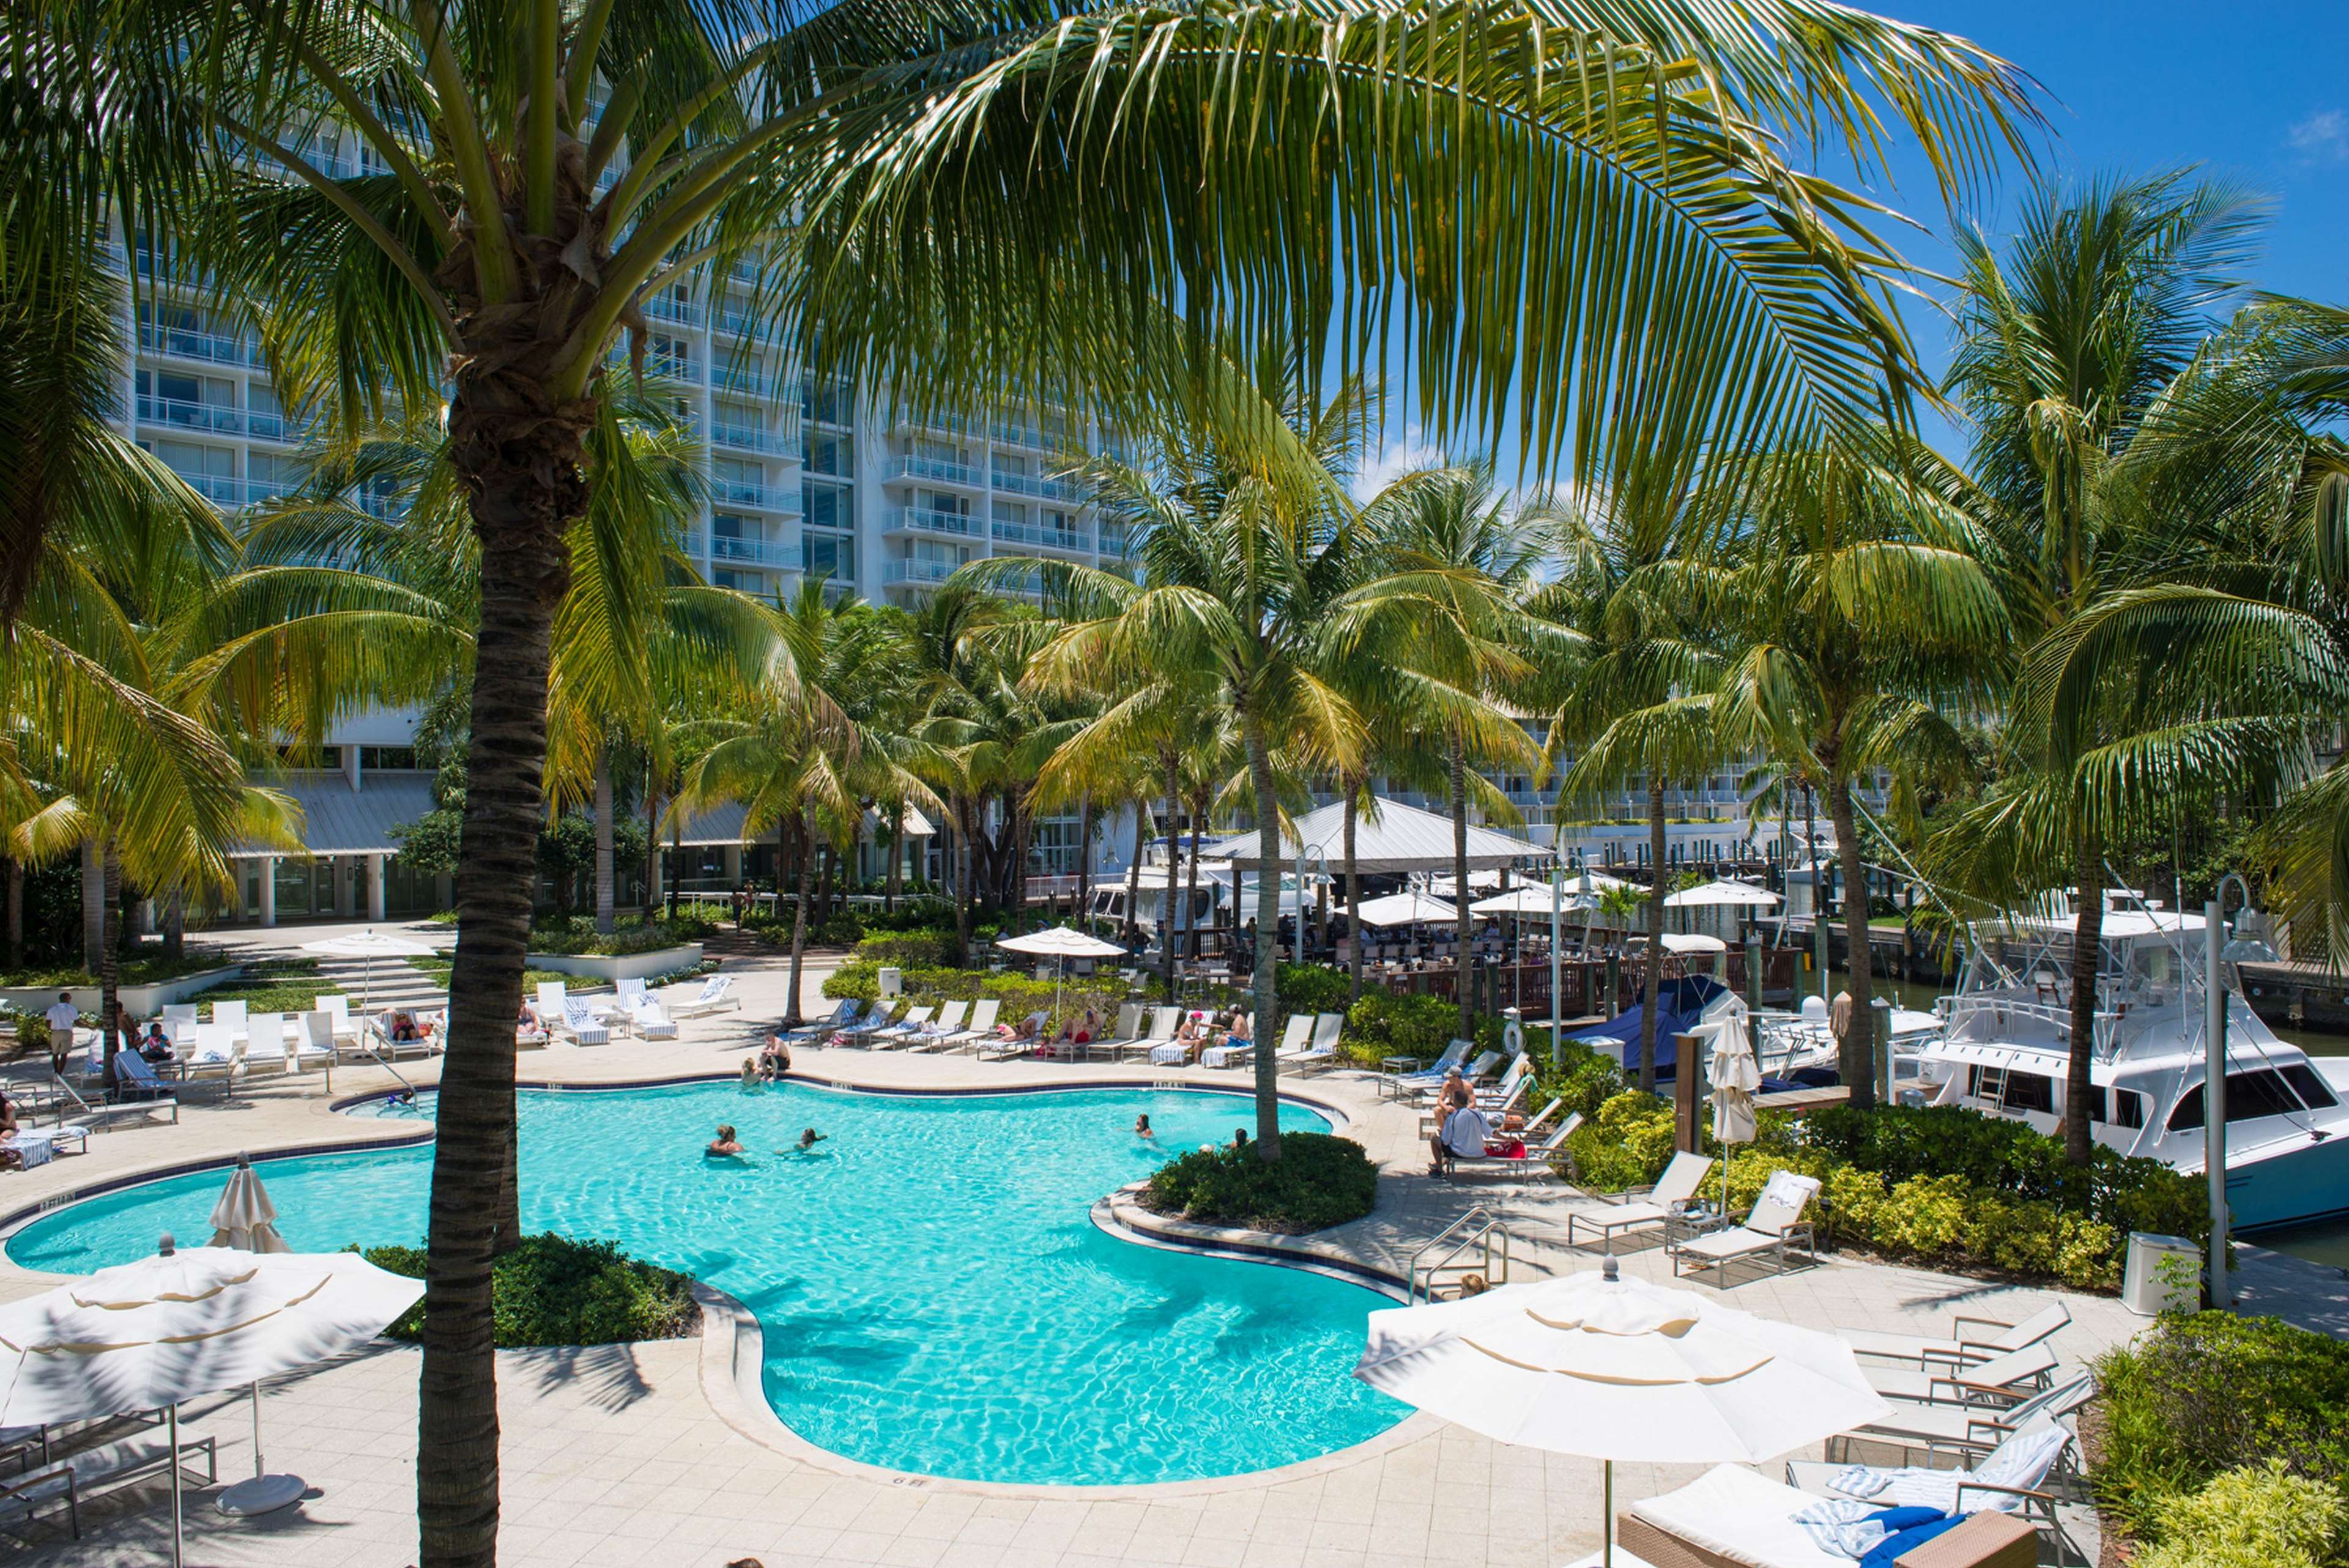 Hilton Fort Lauderdale Marina Photo